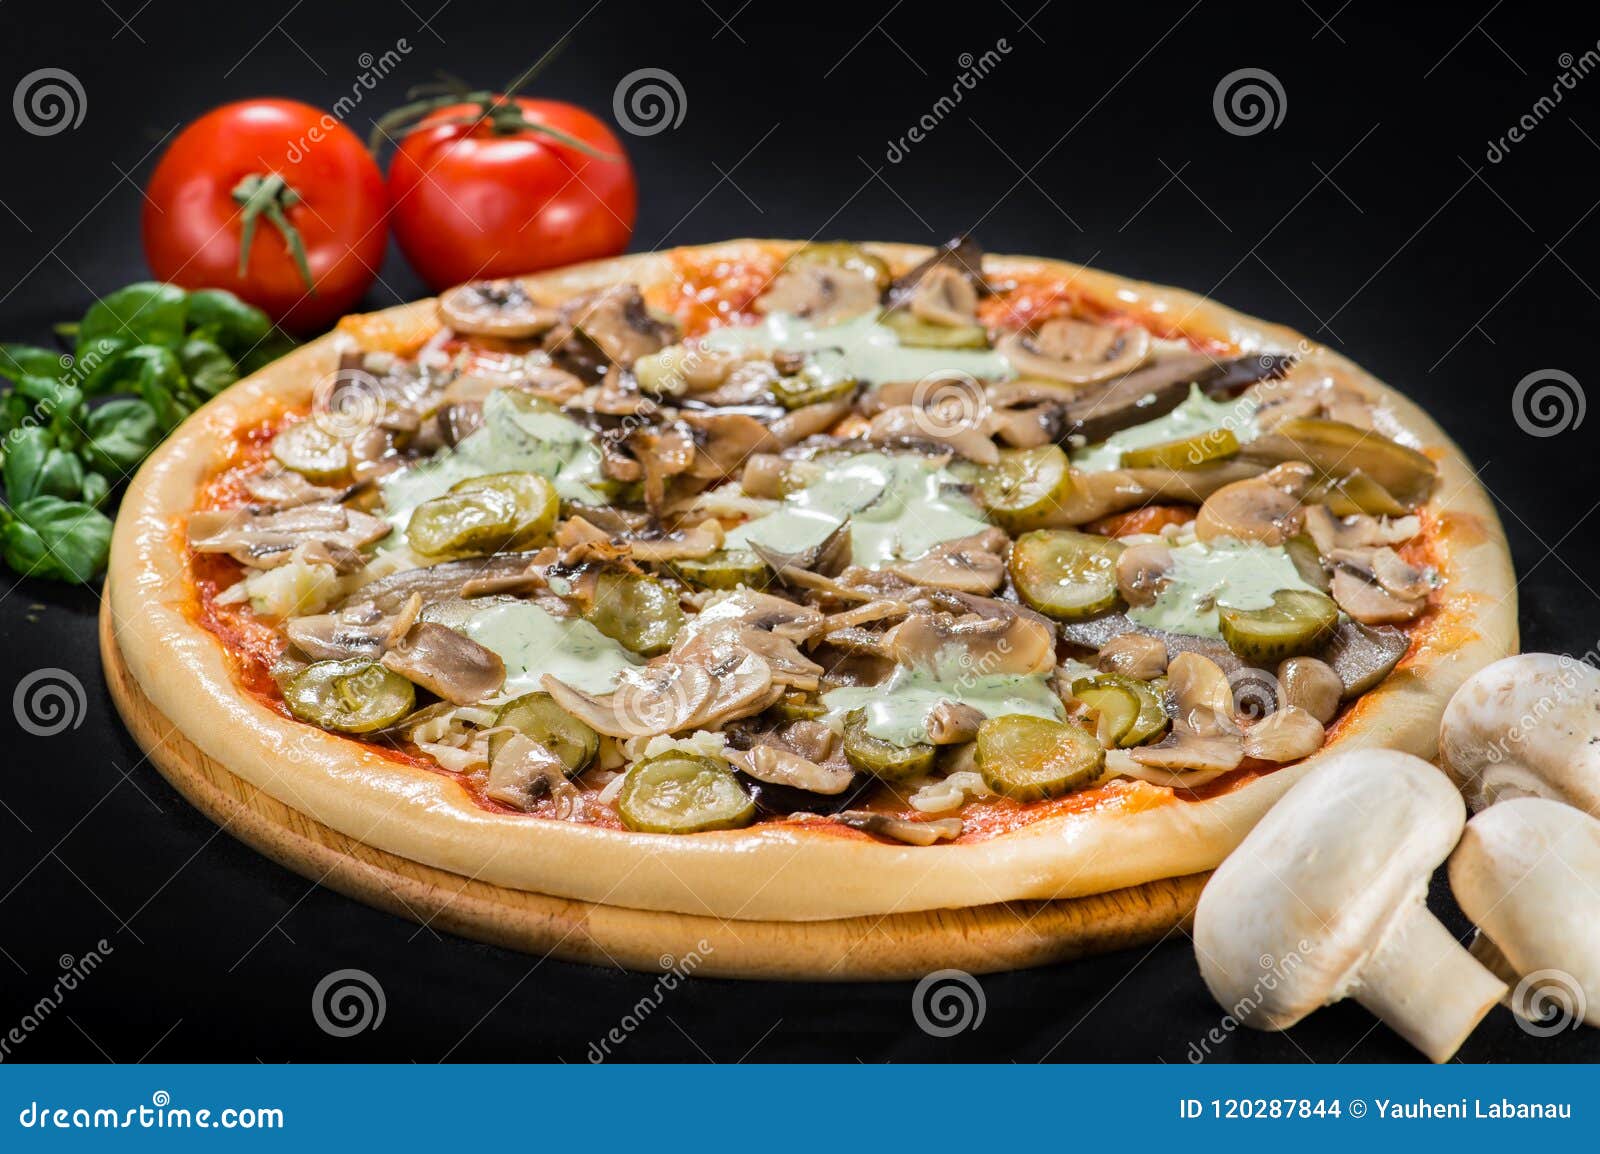 грибная пицца с помидорами и фото 98